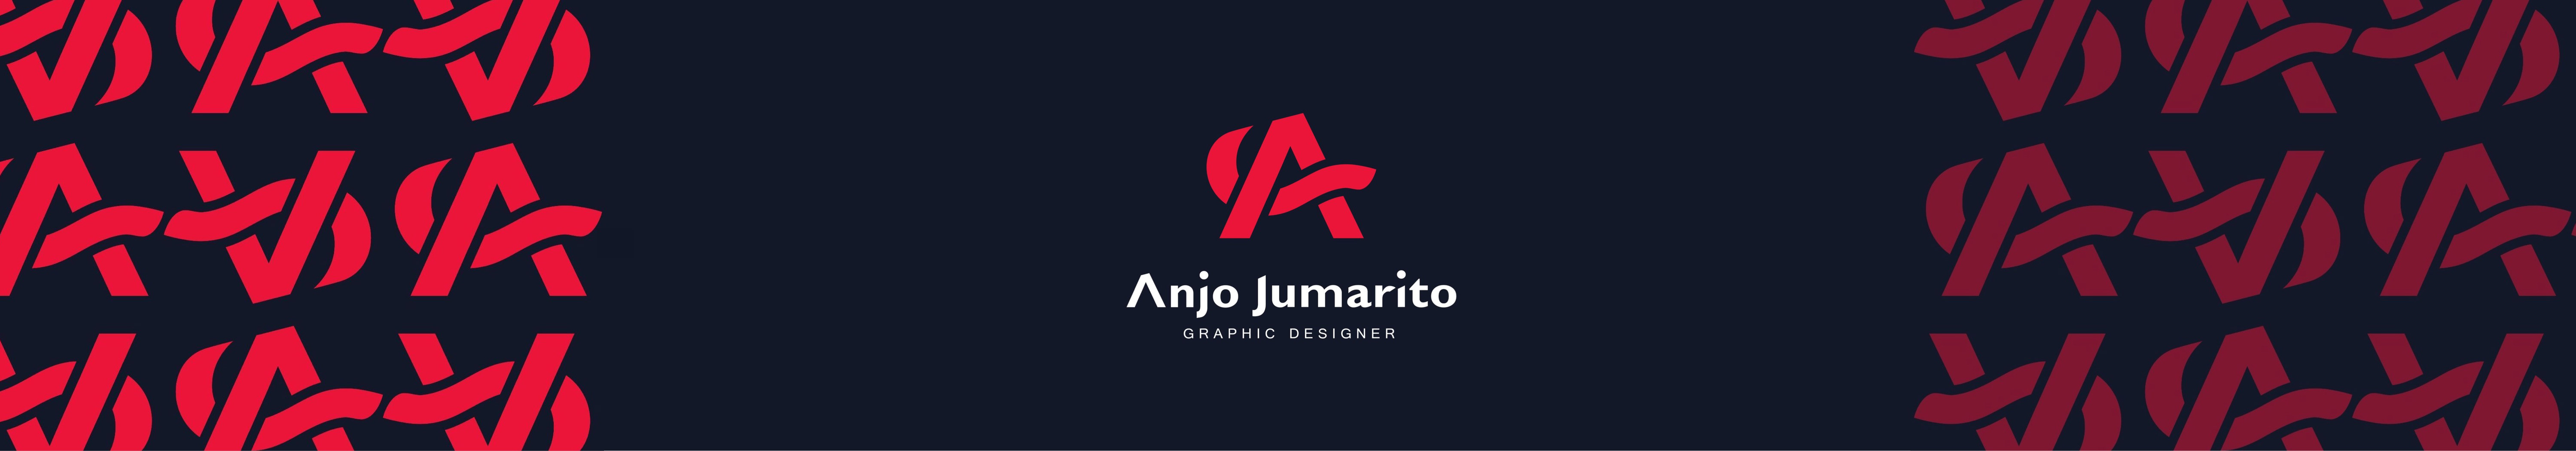 Anjo Jumarito profil başlığı